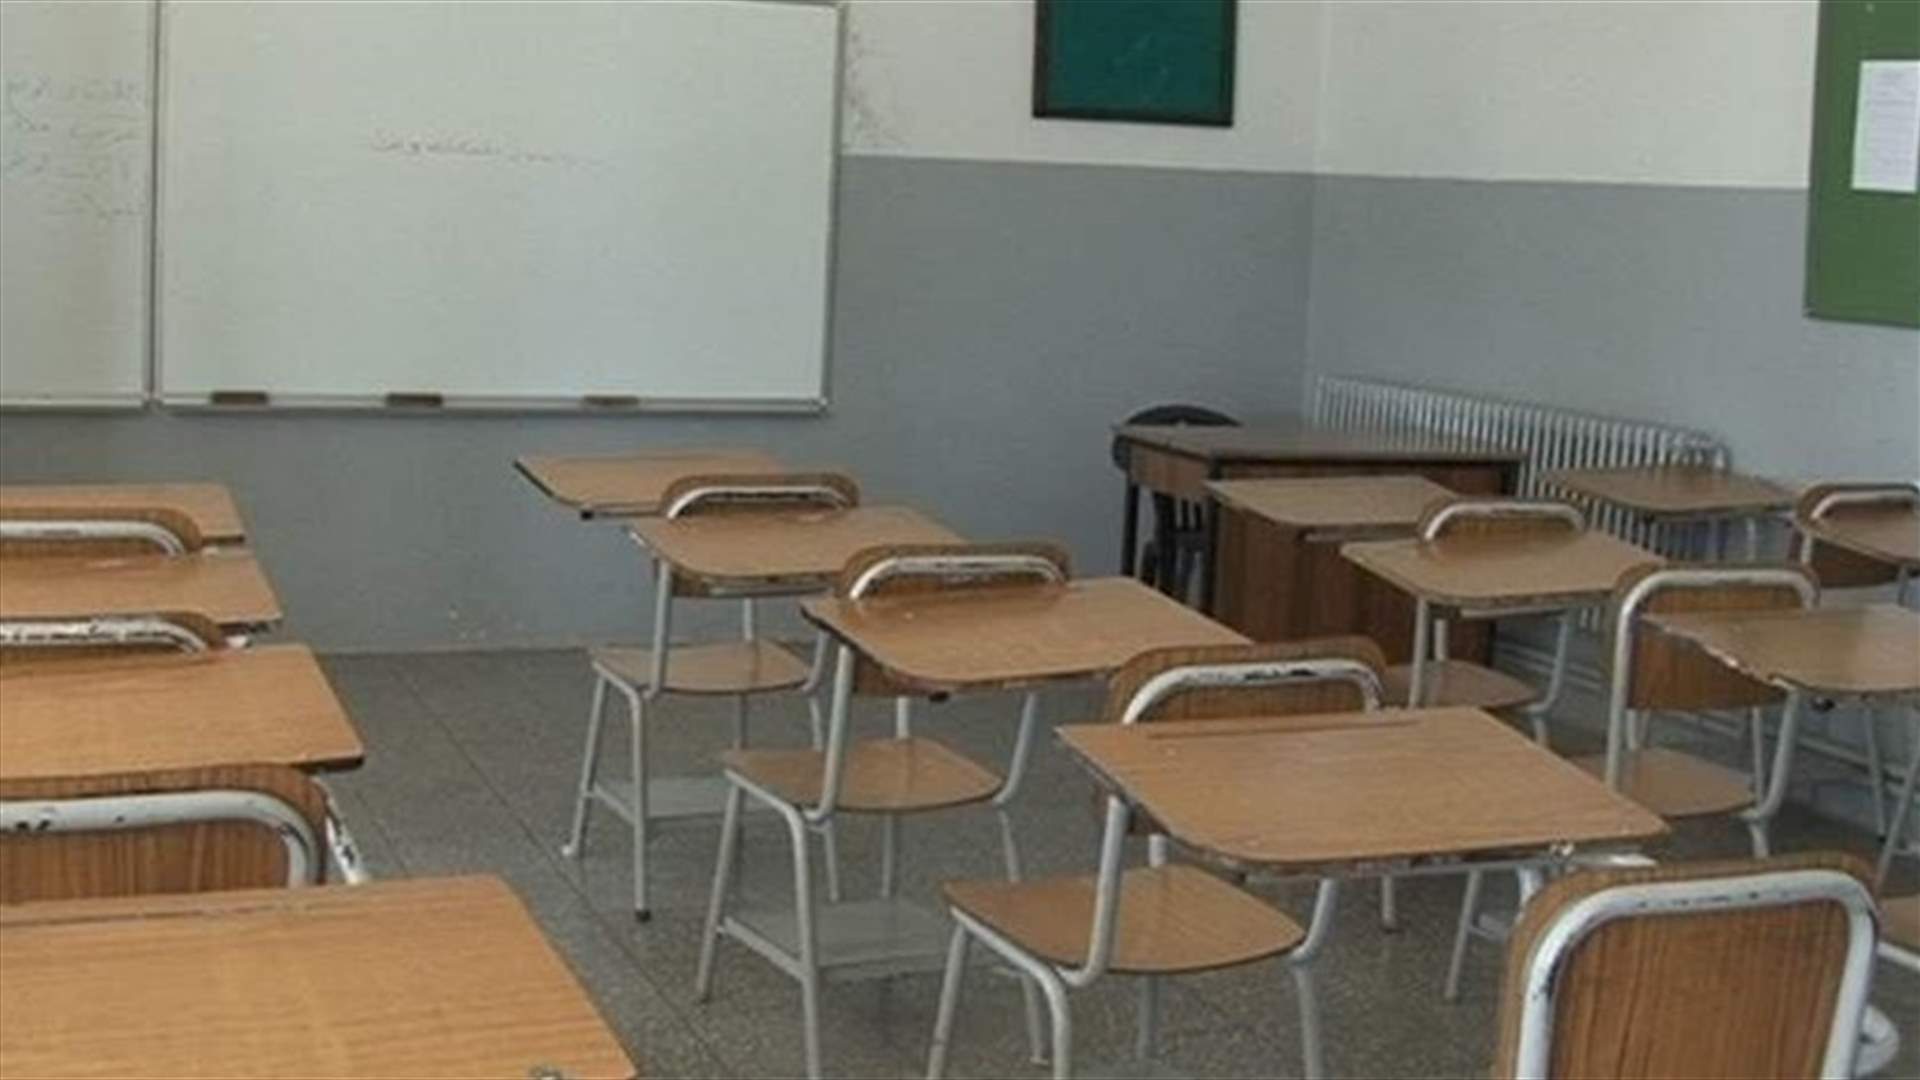 Ministry of Education denies schools shutdown over Coronavirus concerns